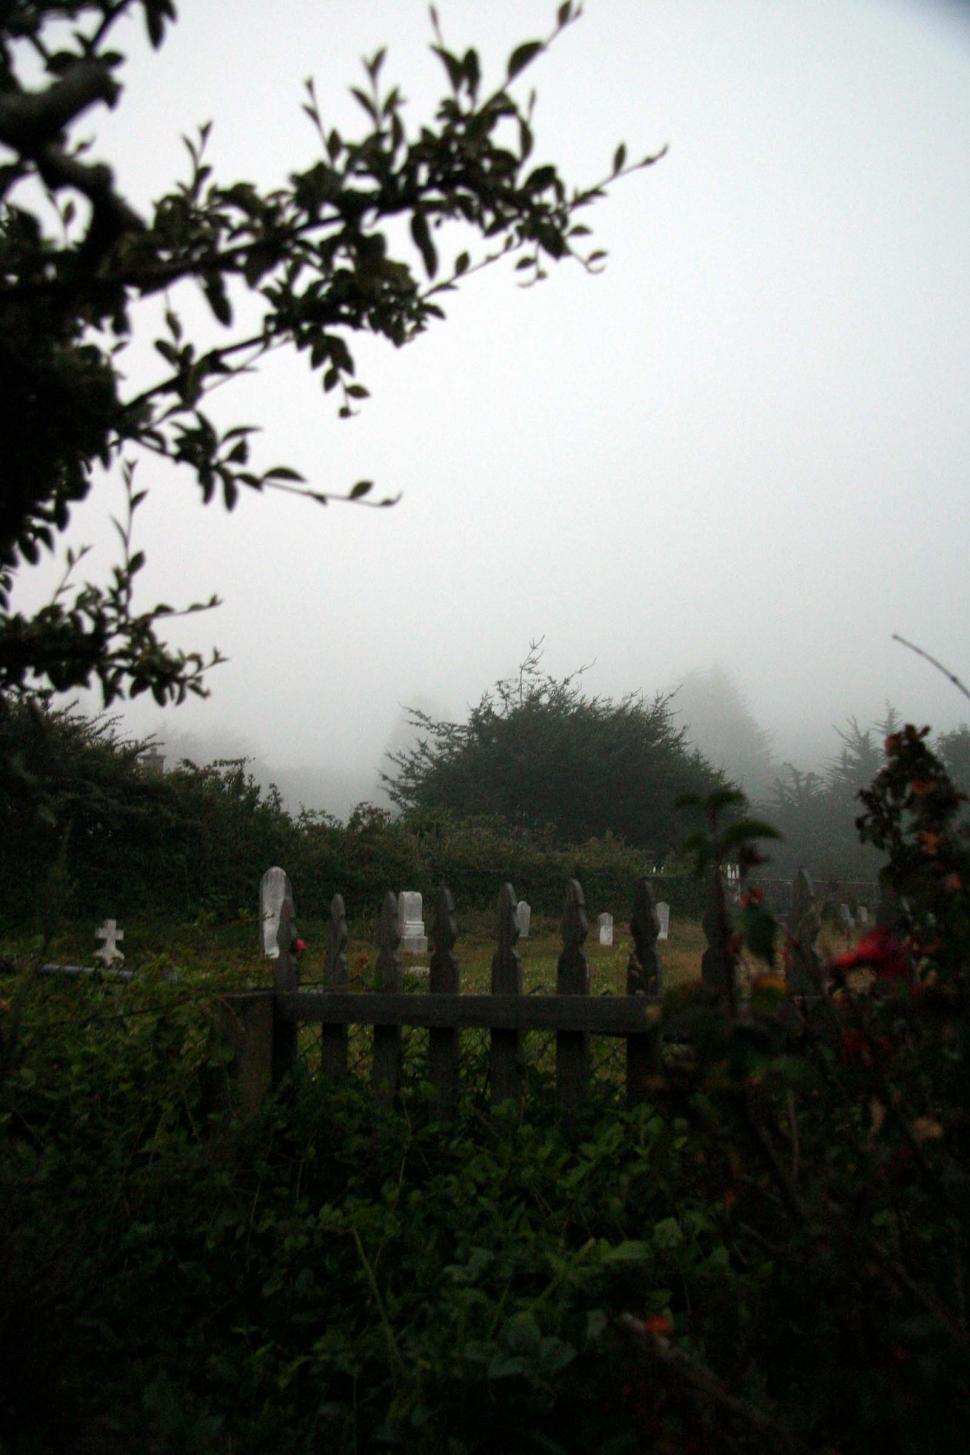 Free Image of Spooky graveyard 